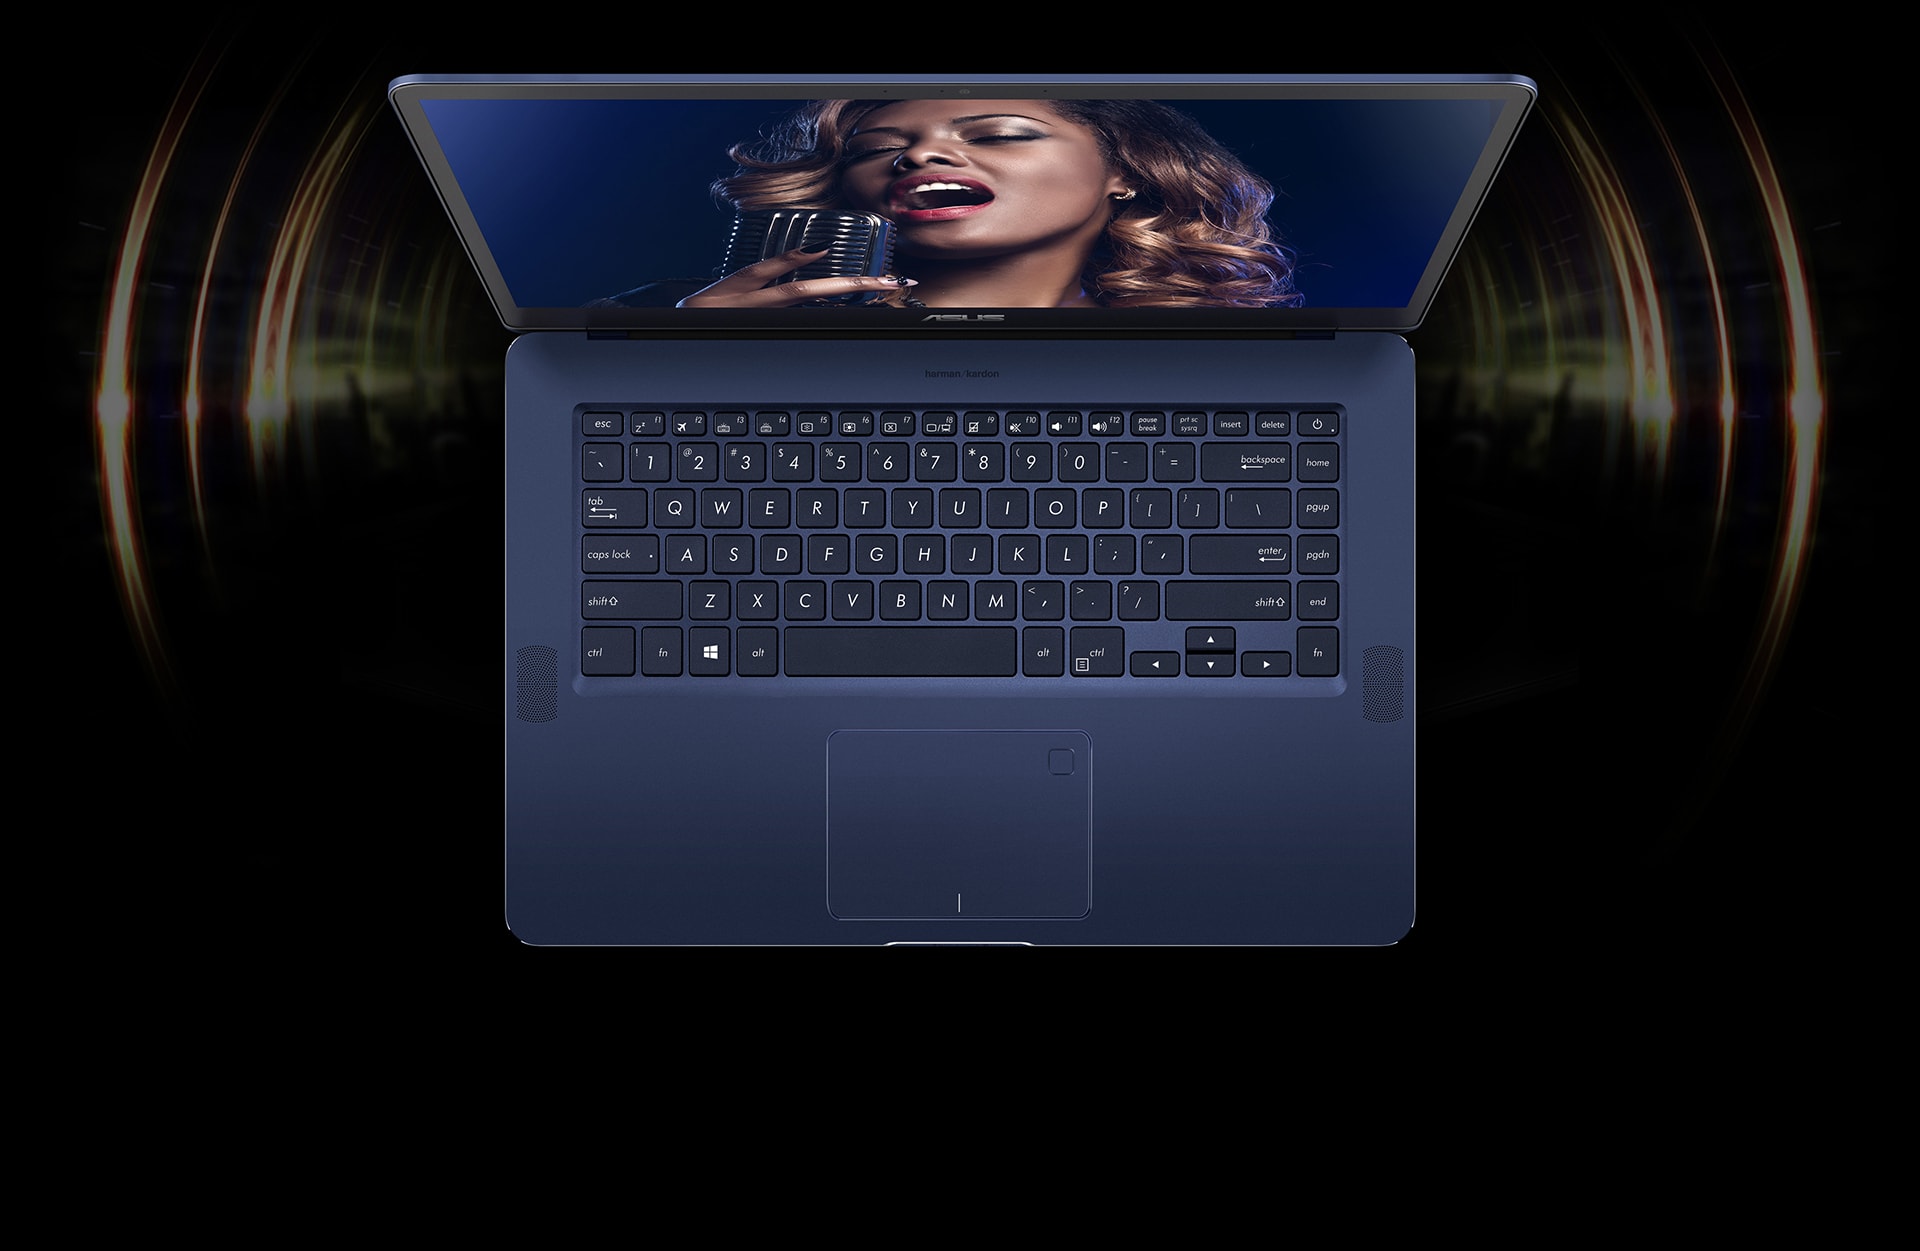 Asus Zenbook Pro Ux550vd 15 6 Full Hd Gaming Laptop Intel Core I7 7700hq 8gb Ram 512gb Ssd